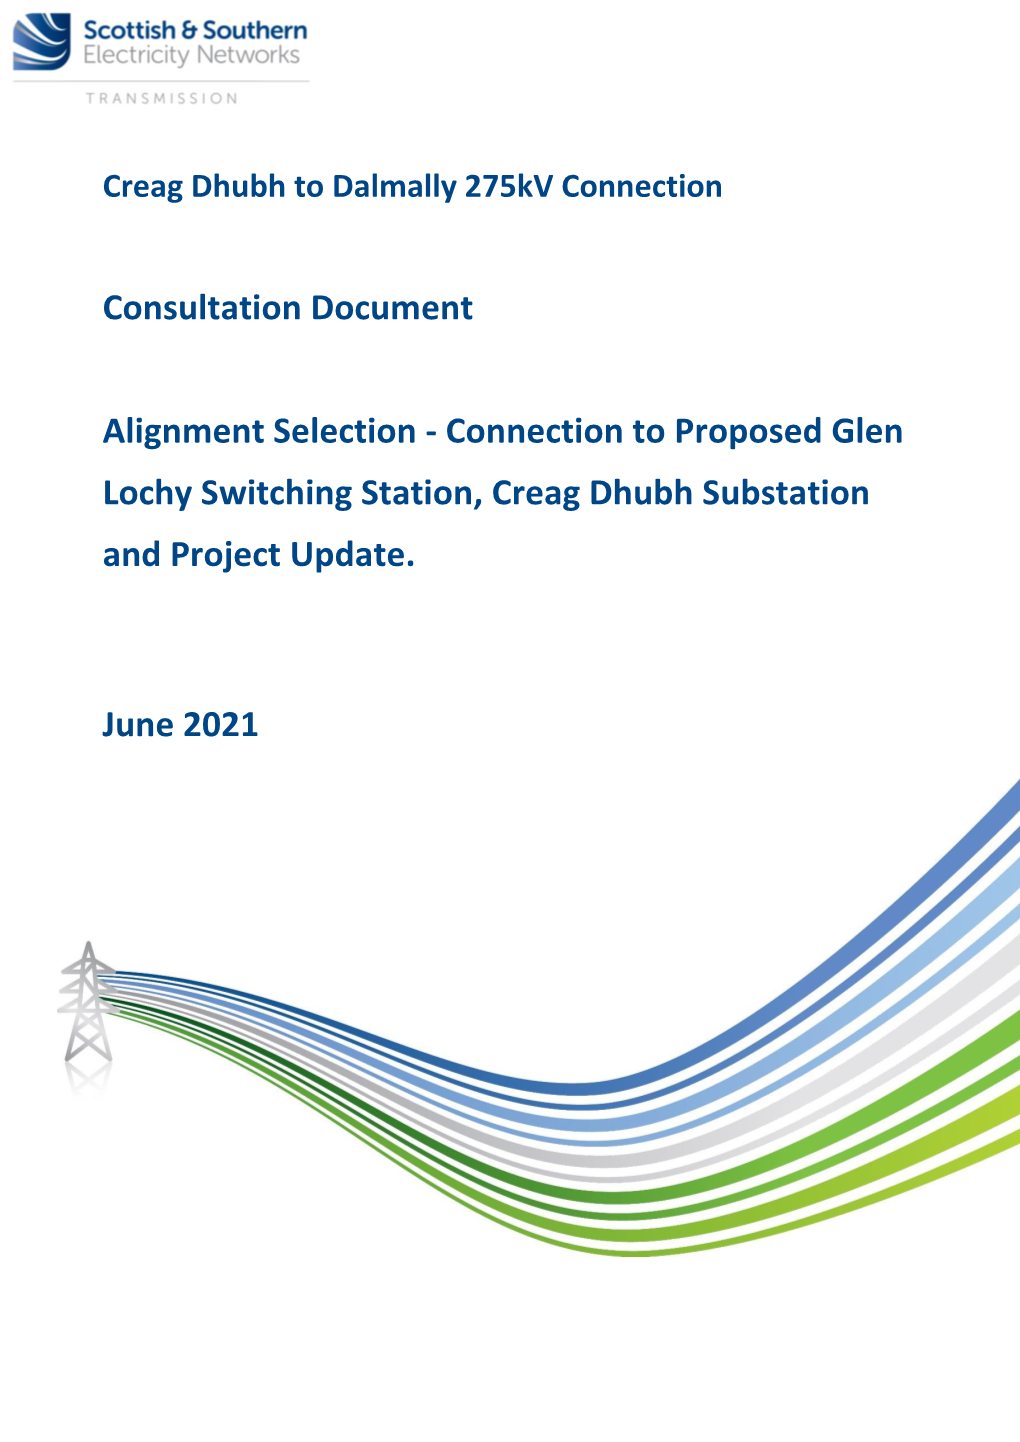 June 2021 Consultation Document Alignment Selection